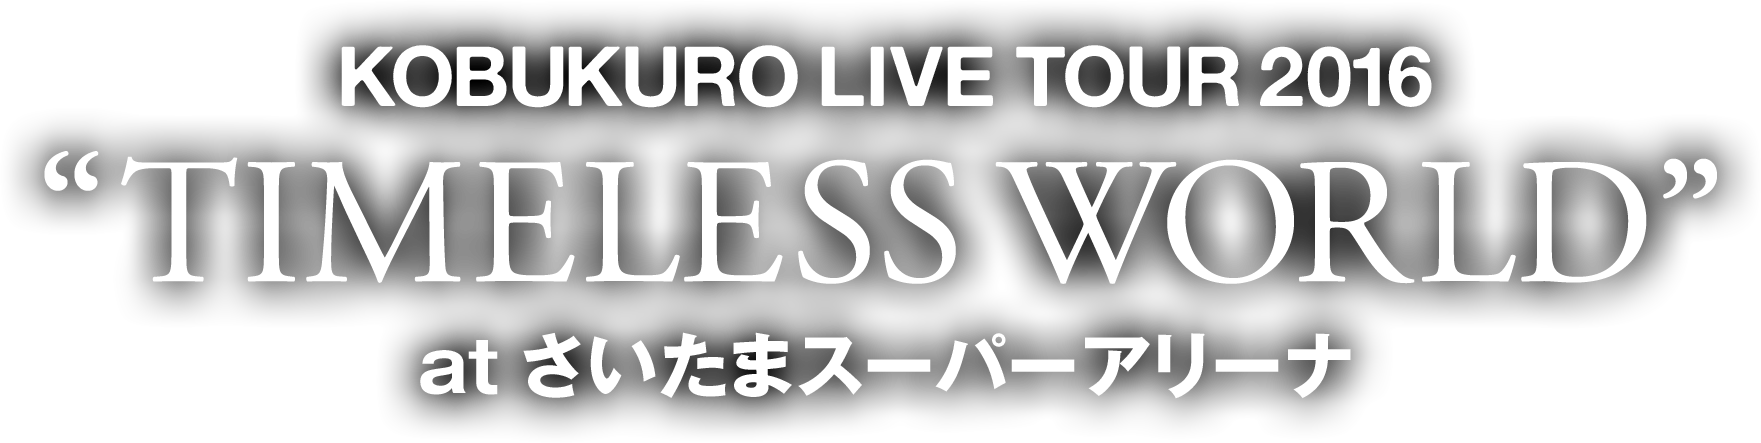 KOBUKURO LIVE TOUR 2016“TIMELESS WORLD”at さいたまスーパーアリーナ